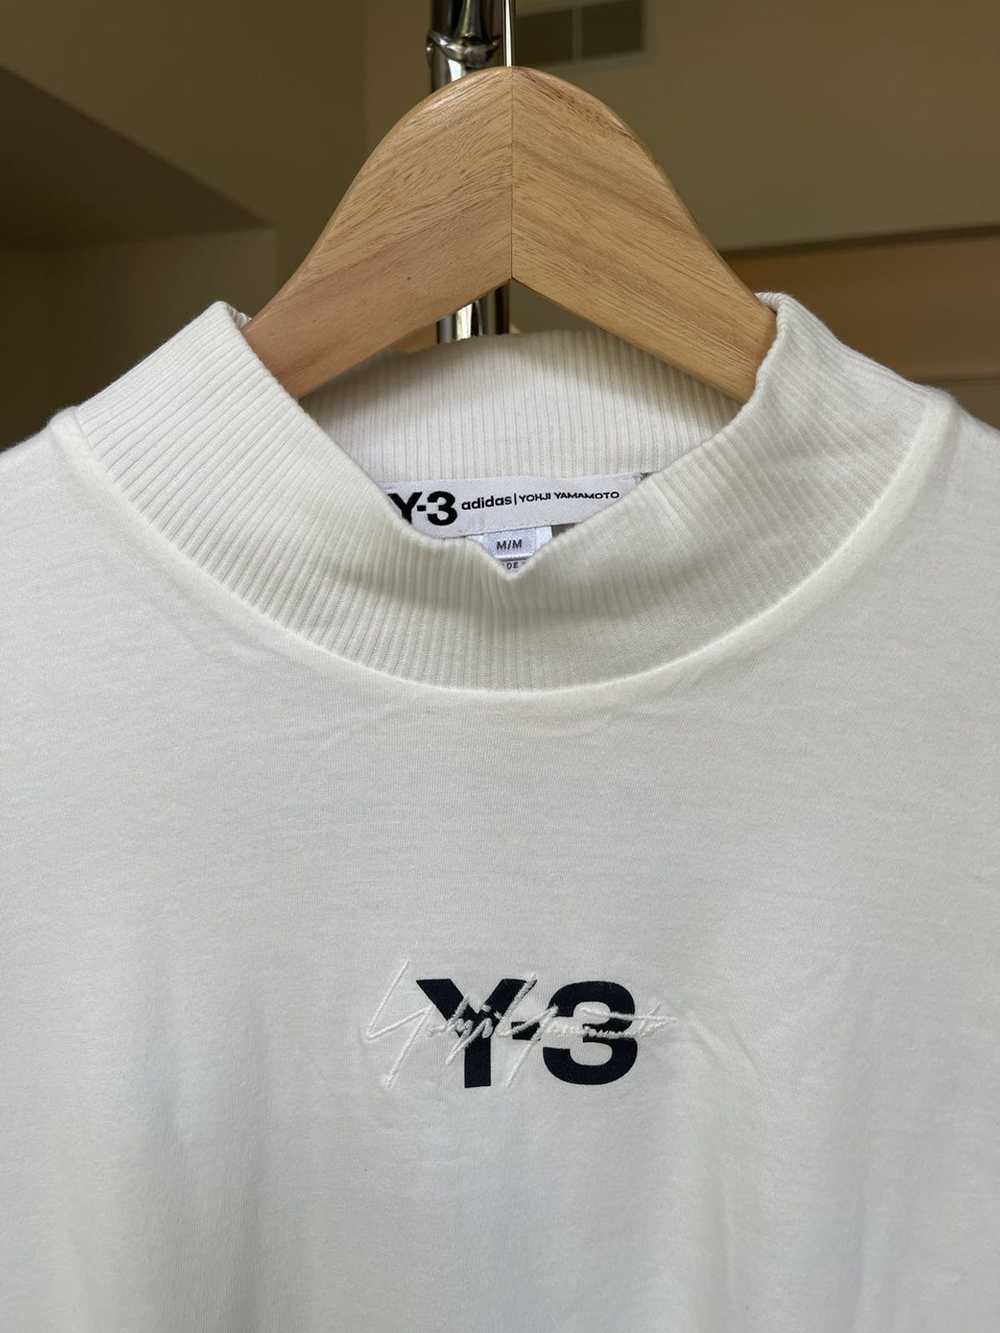 Y-3 Y-3 Long Sleeve Shirt shirt size M - image 3